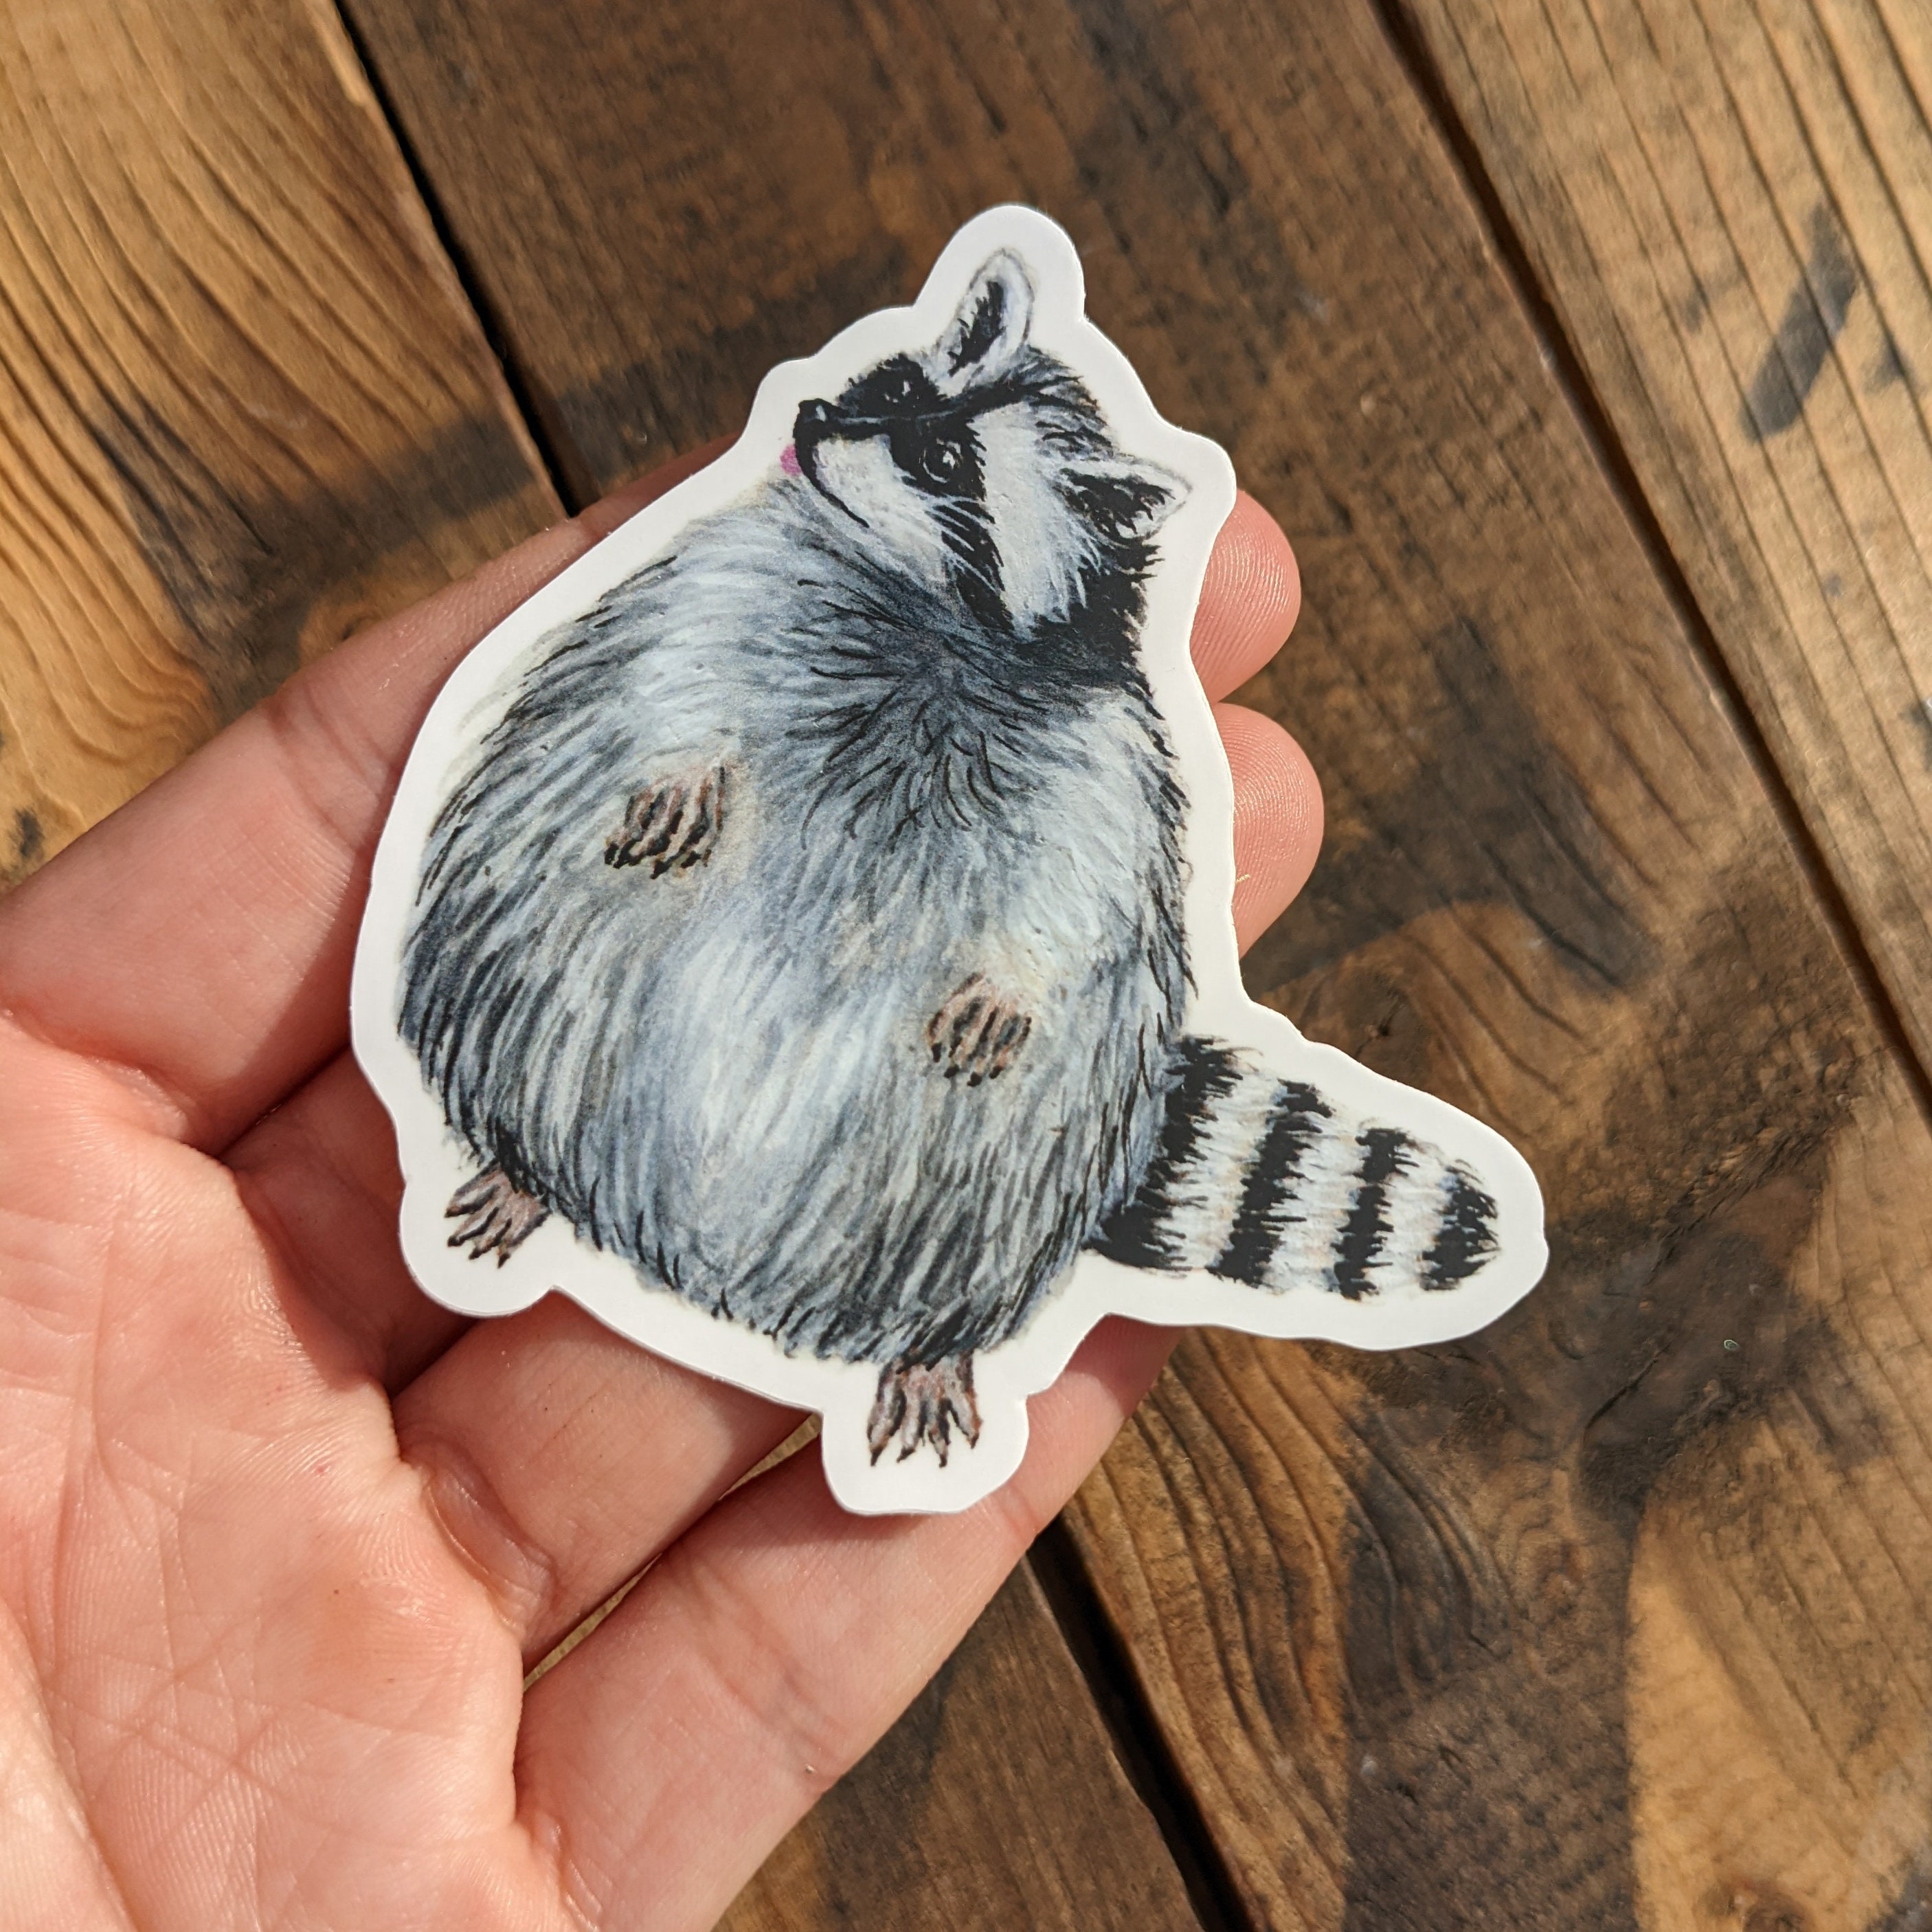 The Raccoon Sticker